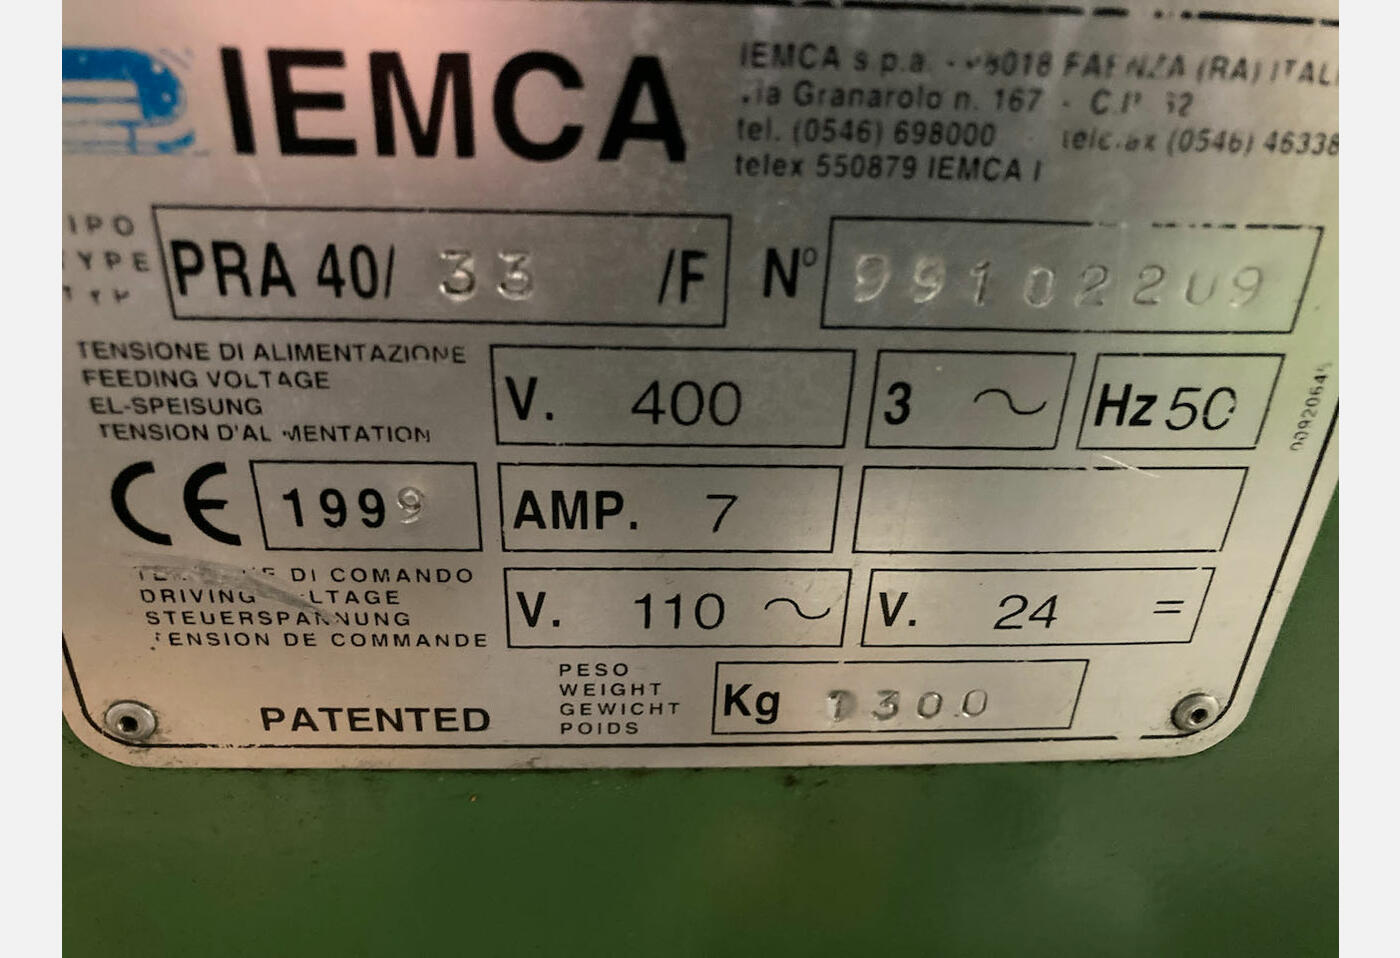 EX01 BARLOADER IEMCA PRA 40 33 F